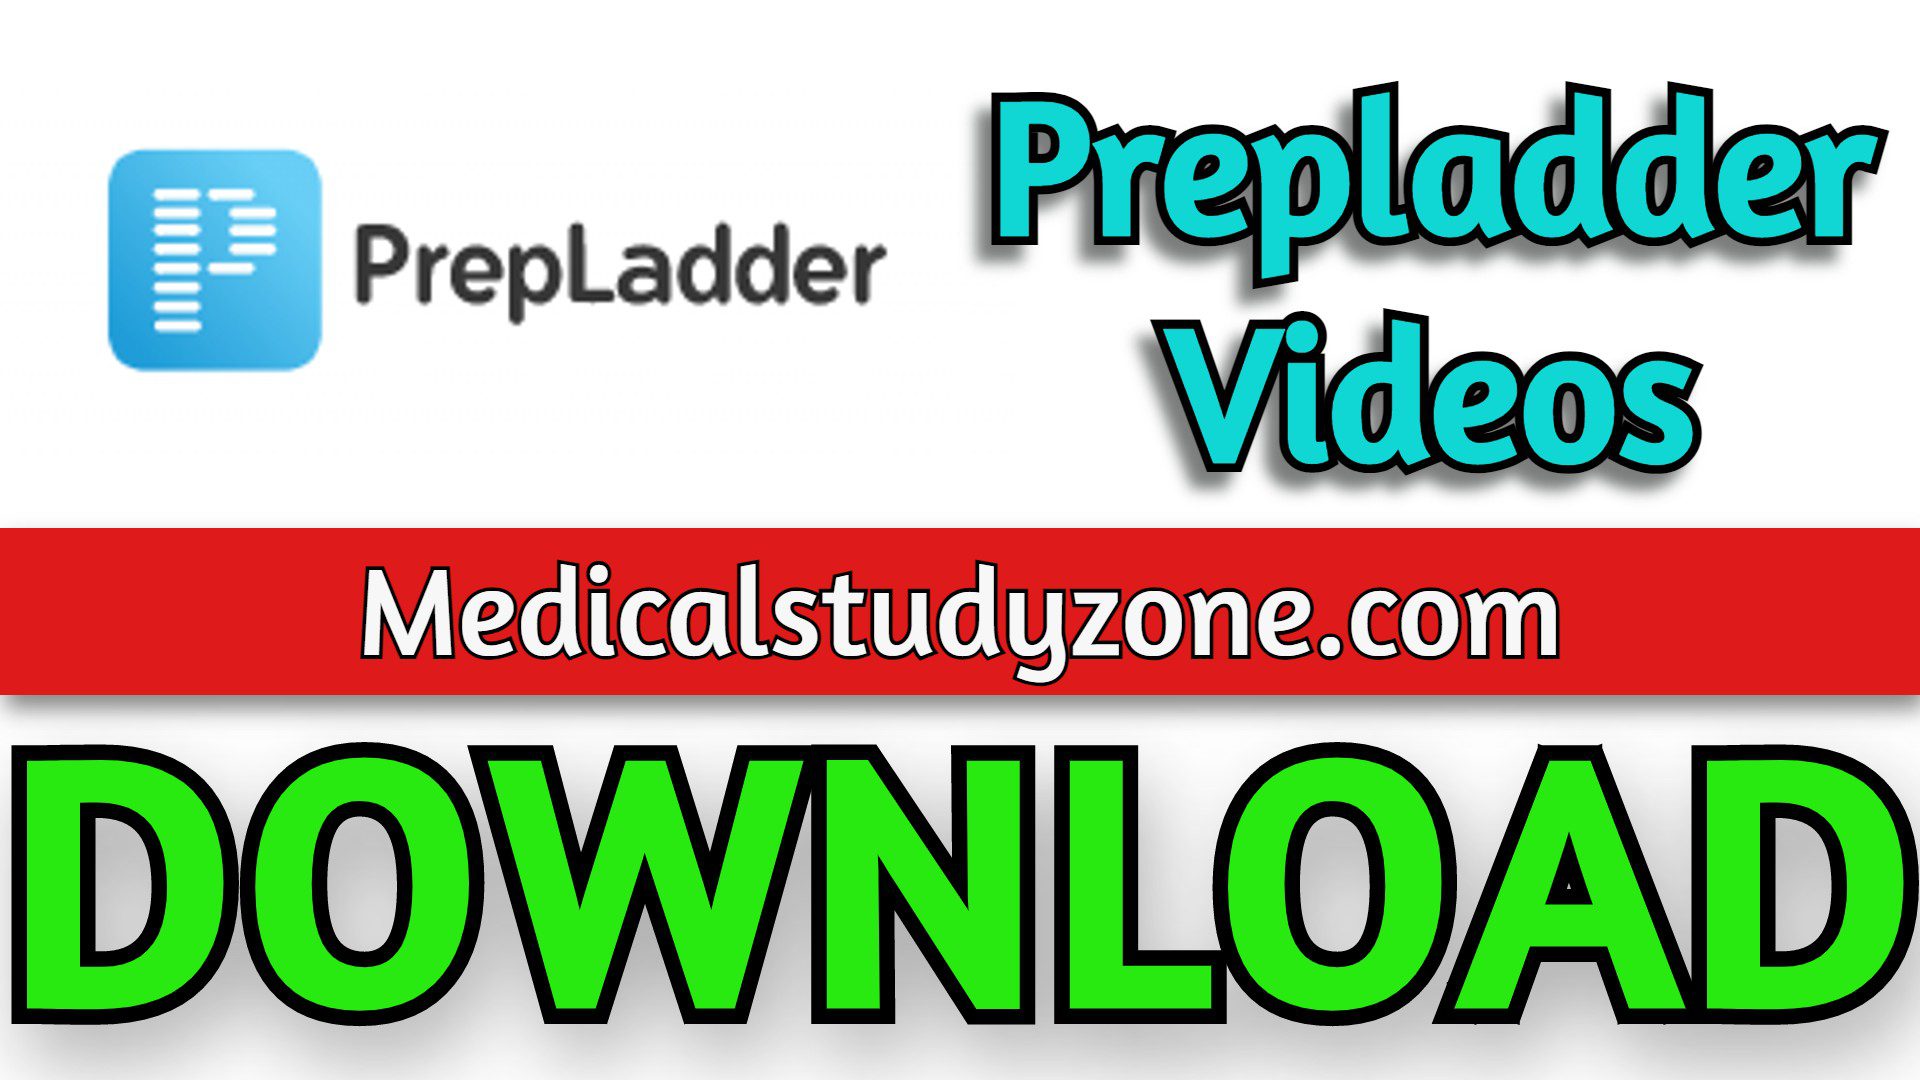 prepladder videos download free